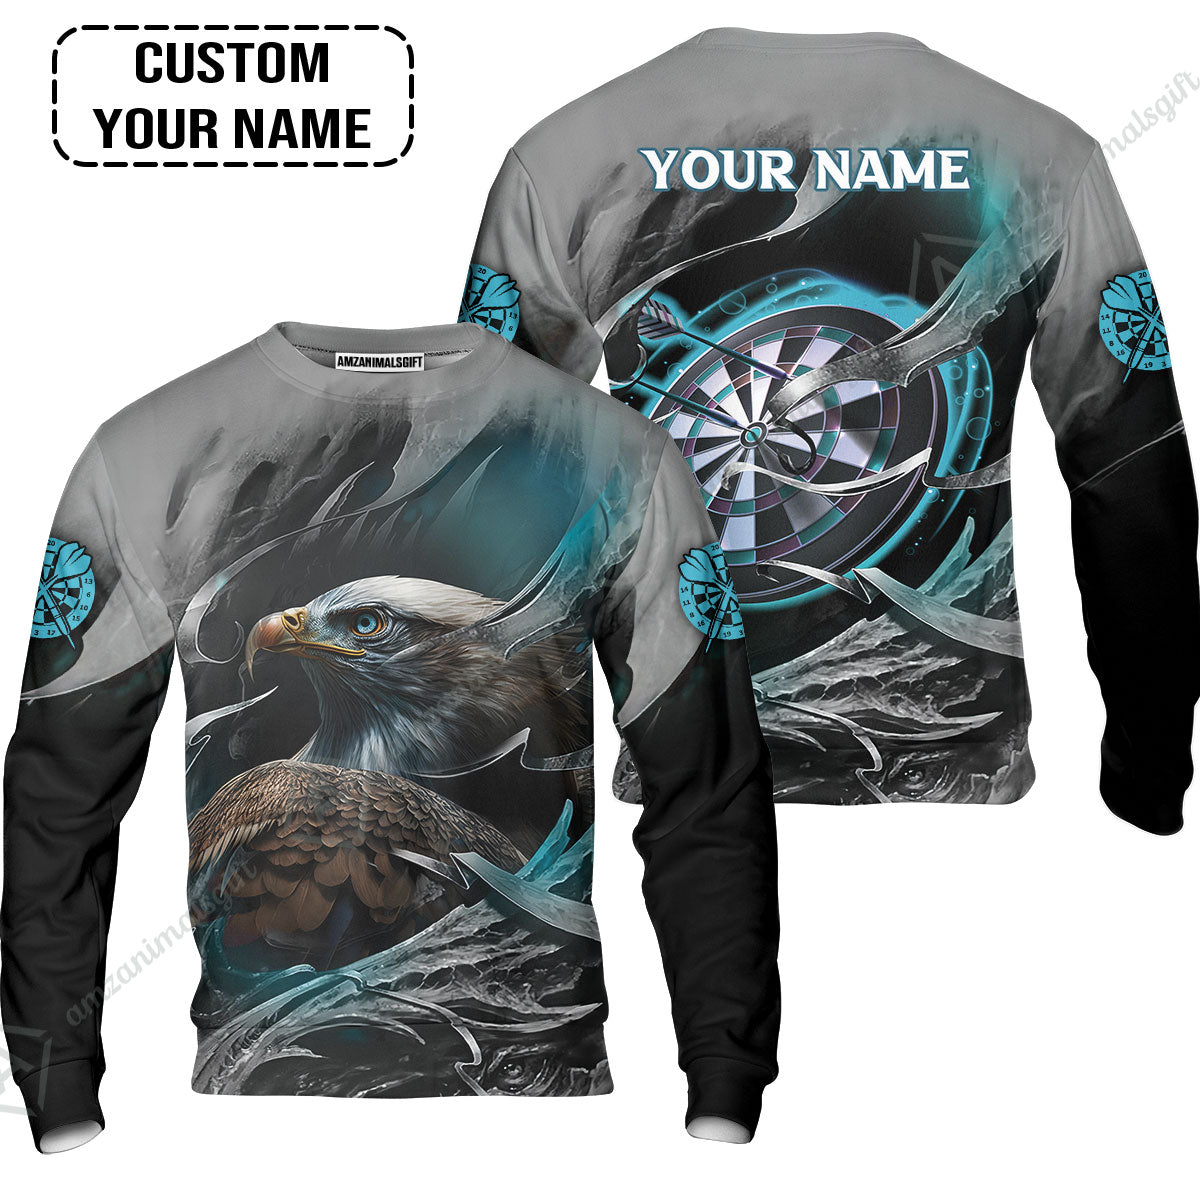 Customized Name Darts Sweatshirt, Bullseye Dartboard Personalized Eagle And Darts Sweatshirt